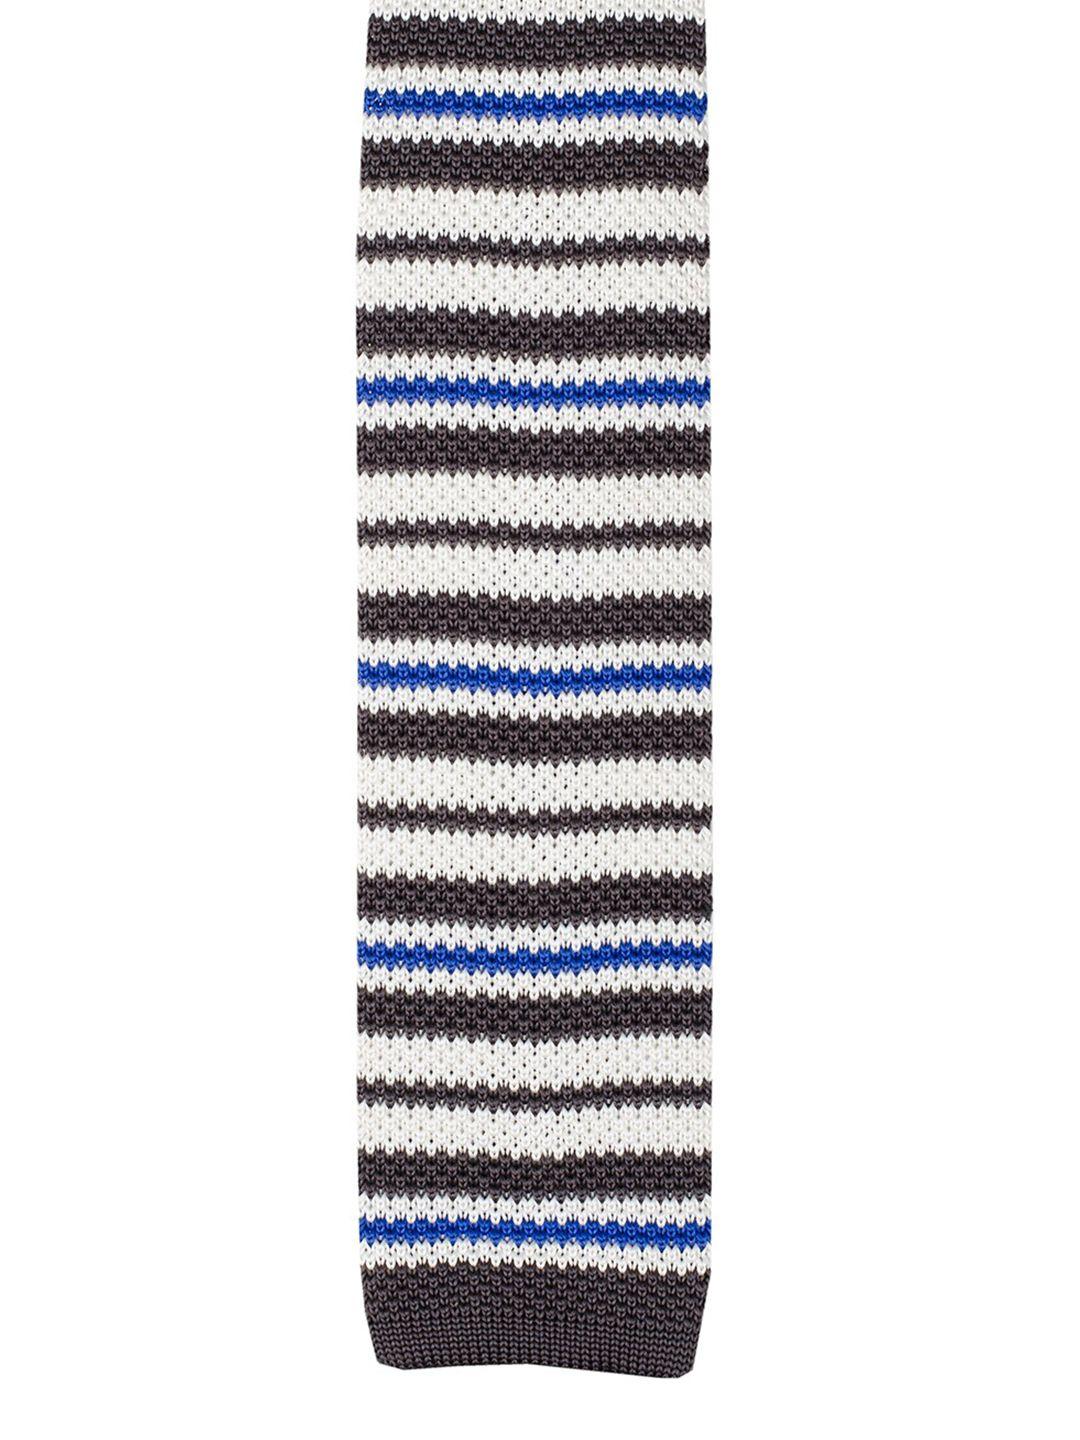 tossido men white & charcoal striped slim tie